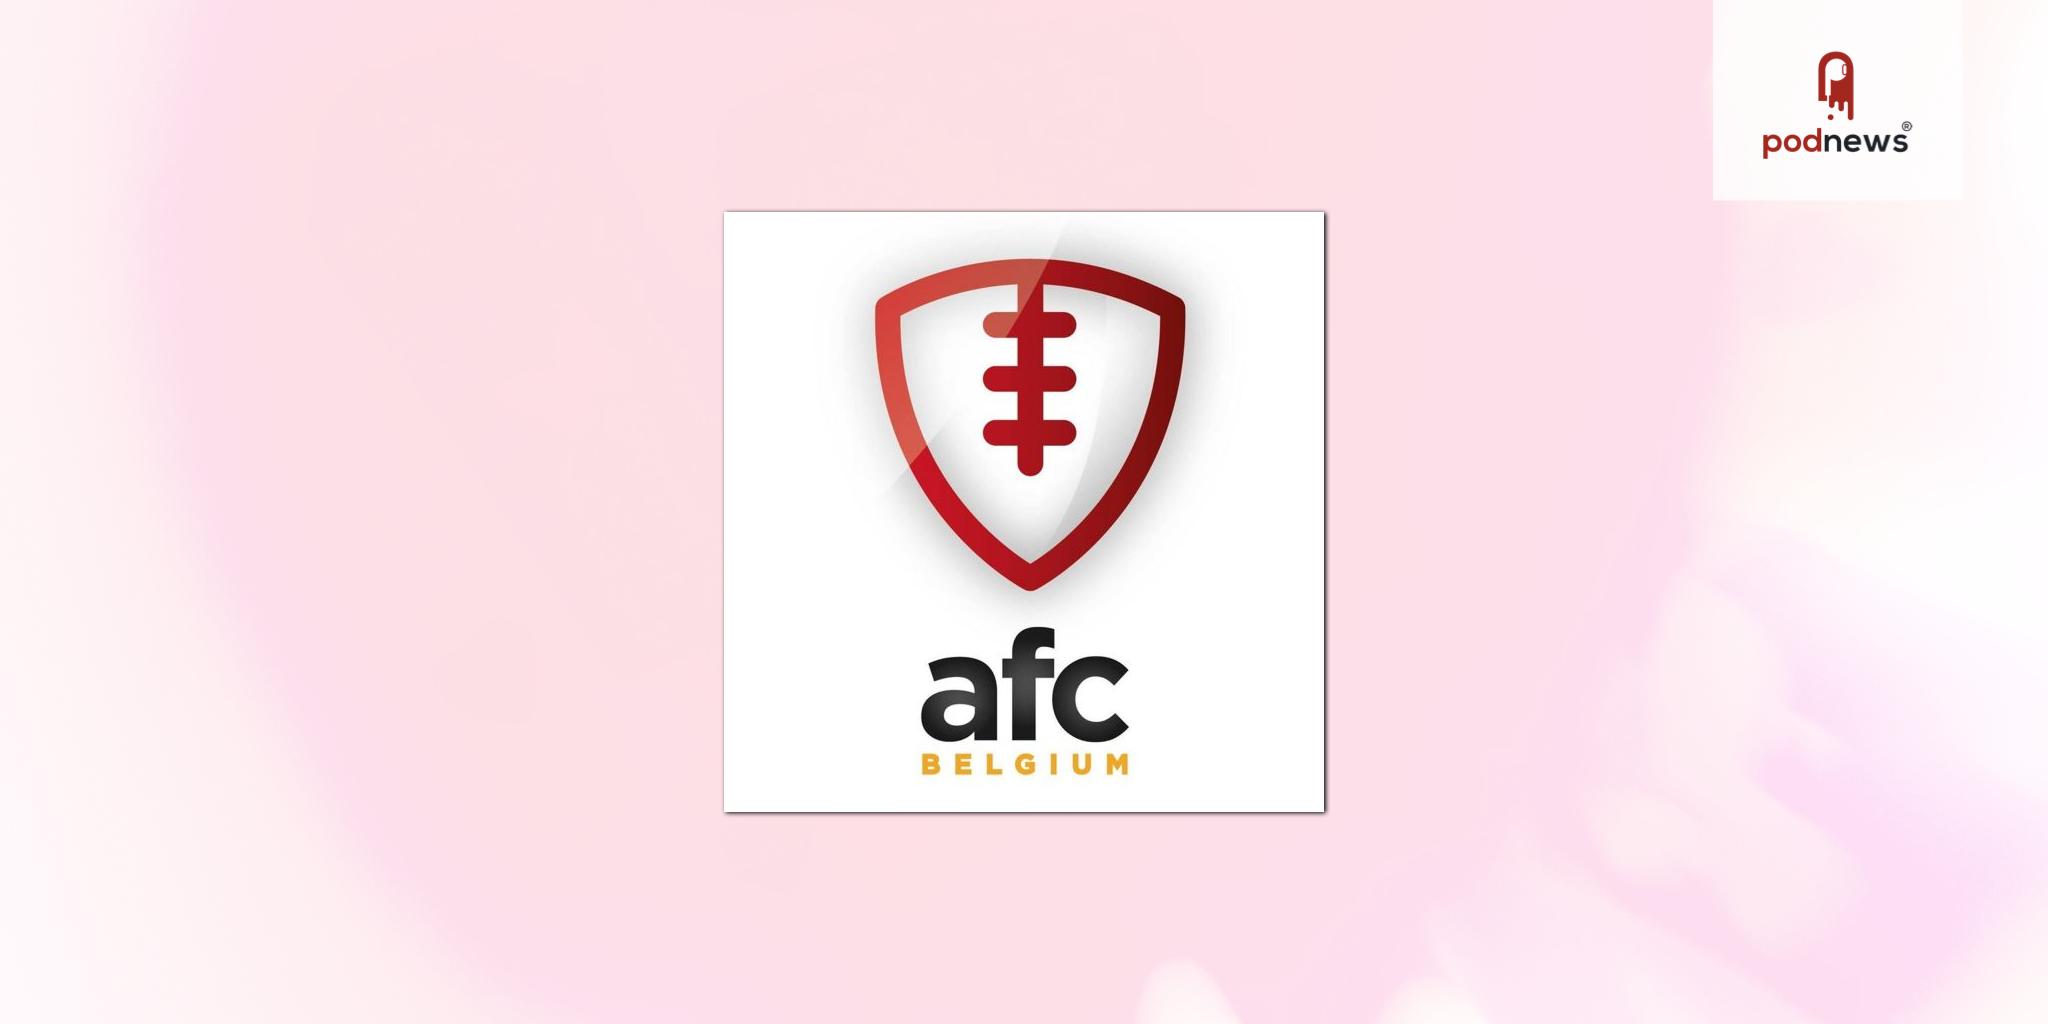 De American Football Community Belgium Podcast